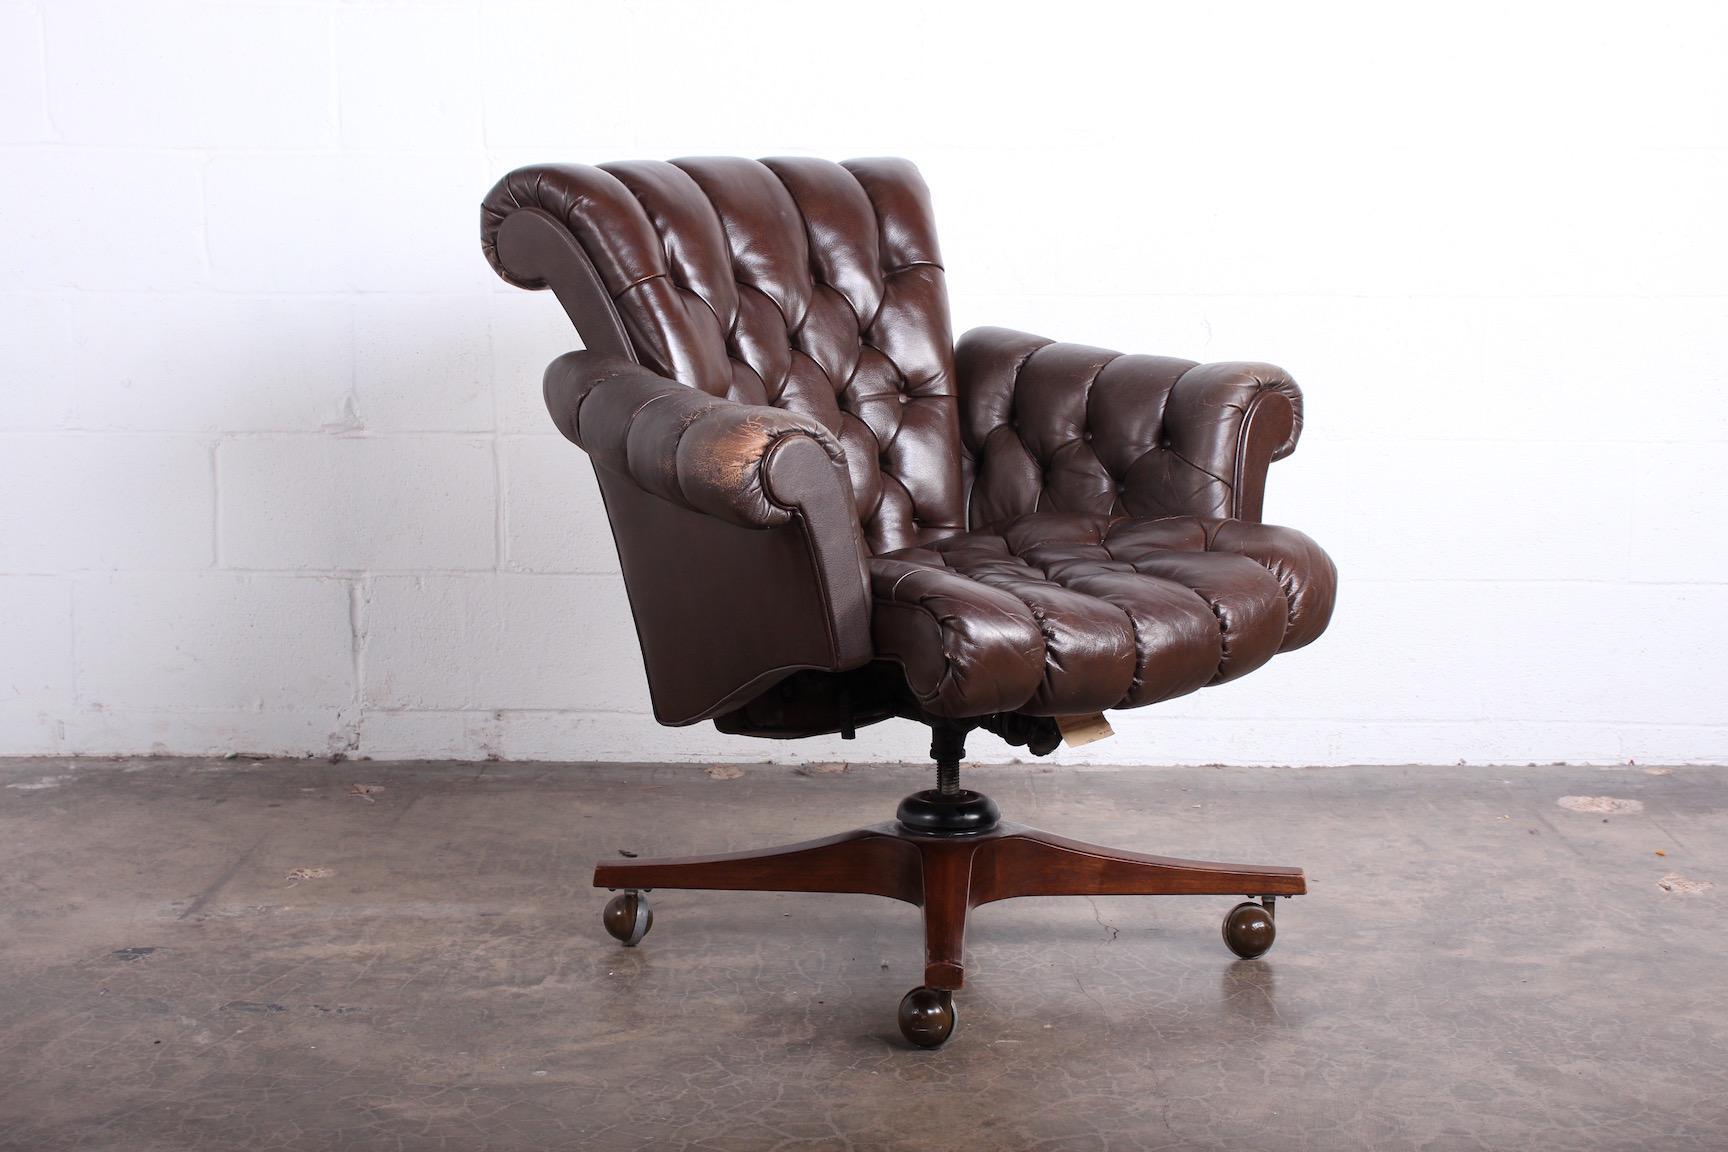 Leather Desk Chair by Edward Wormley for Dunbar